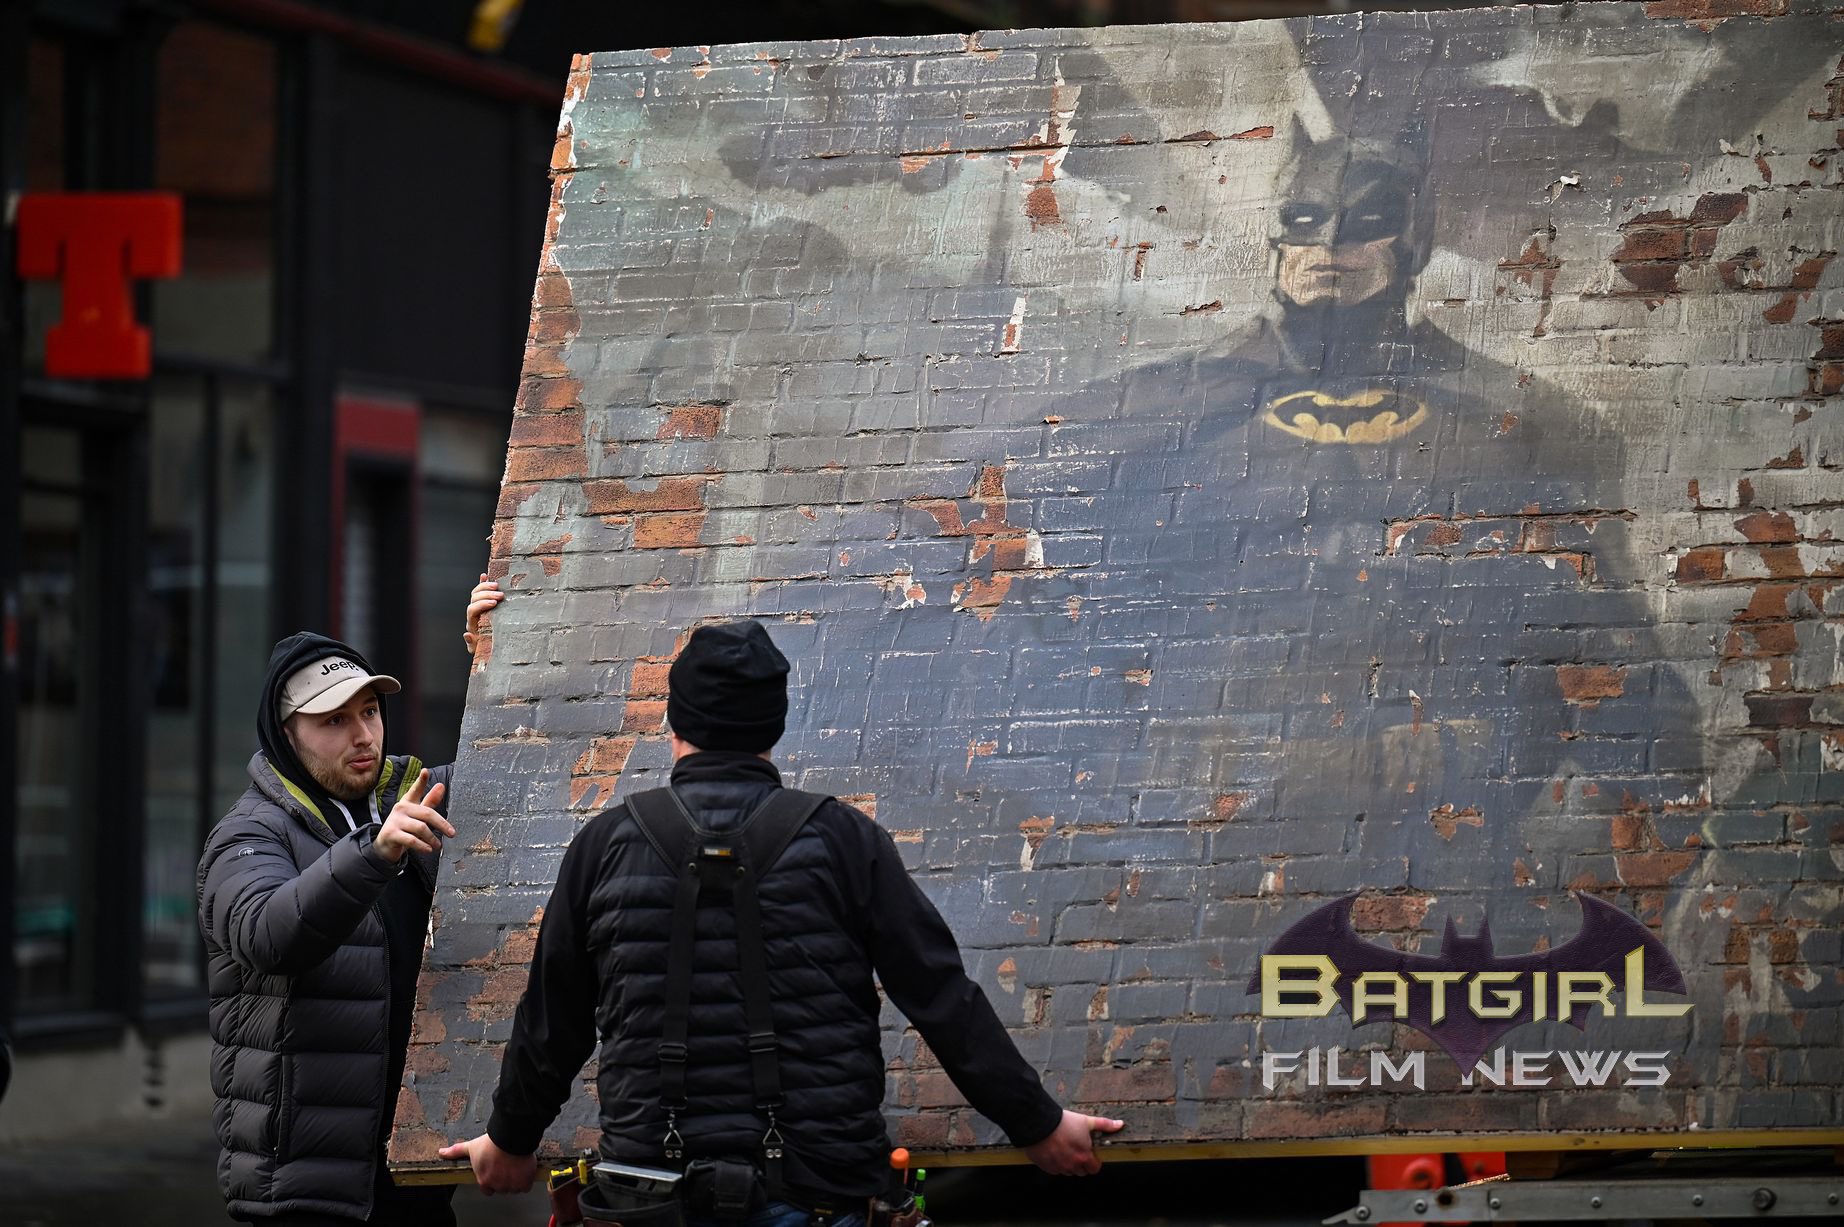 Painel de Batgirl com imagem de Michael Keaton como Batman (Reprodução Twitter)